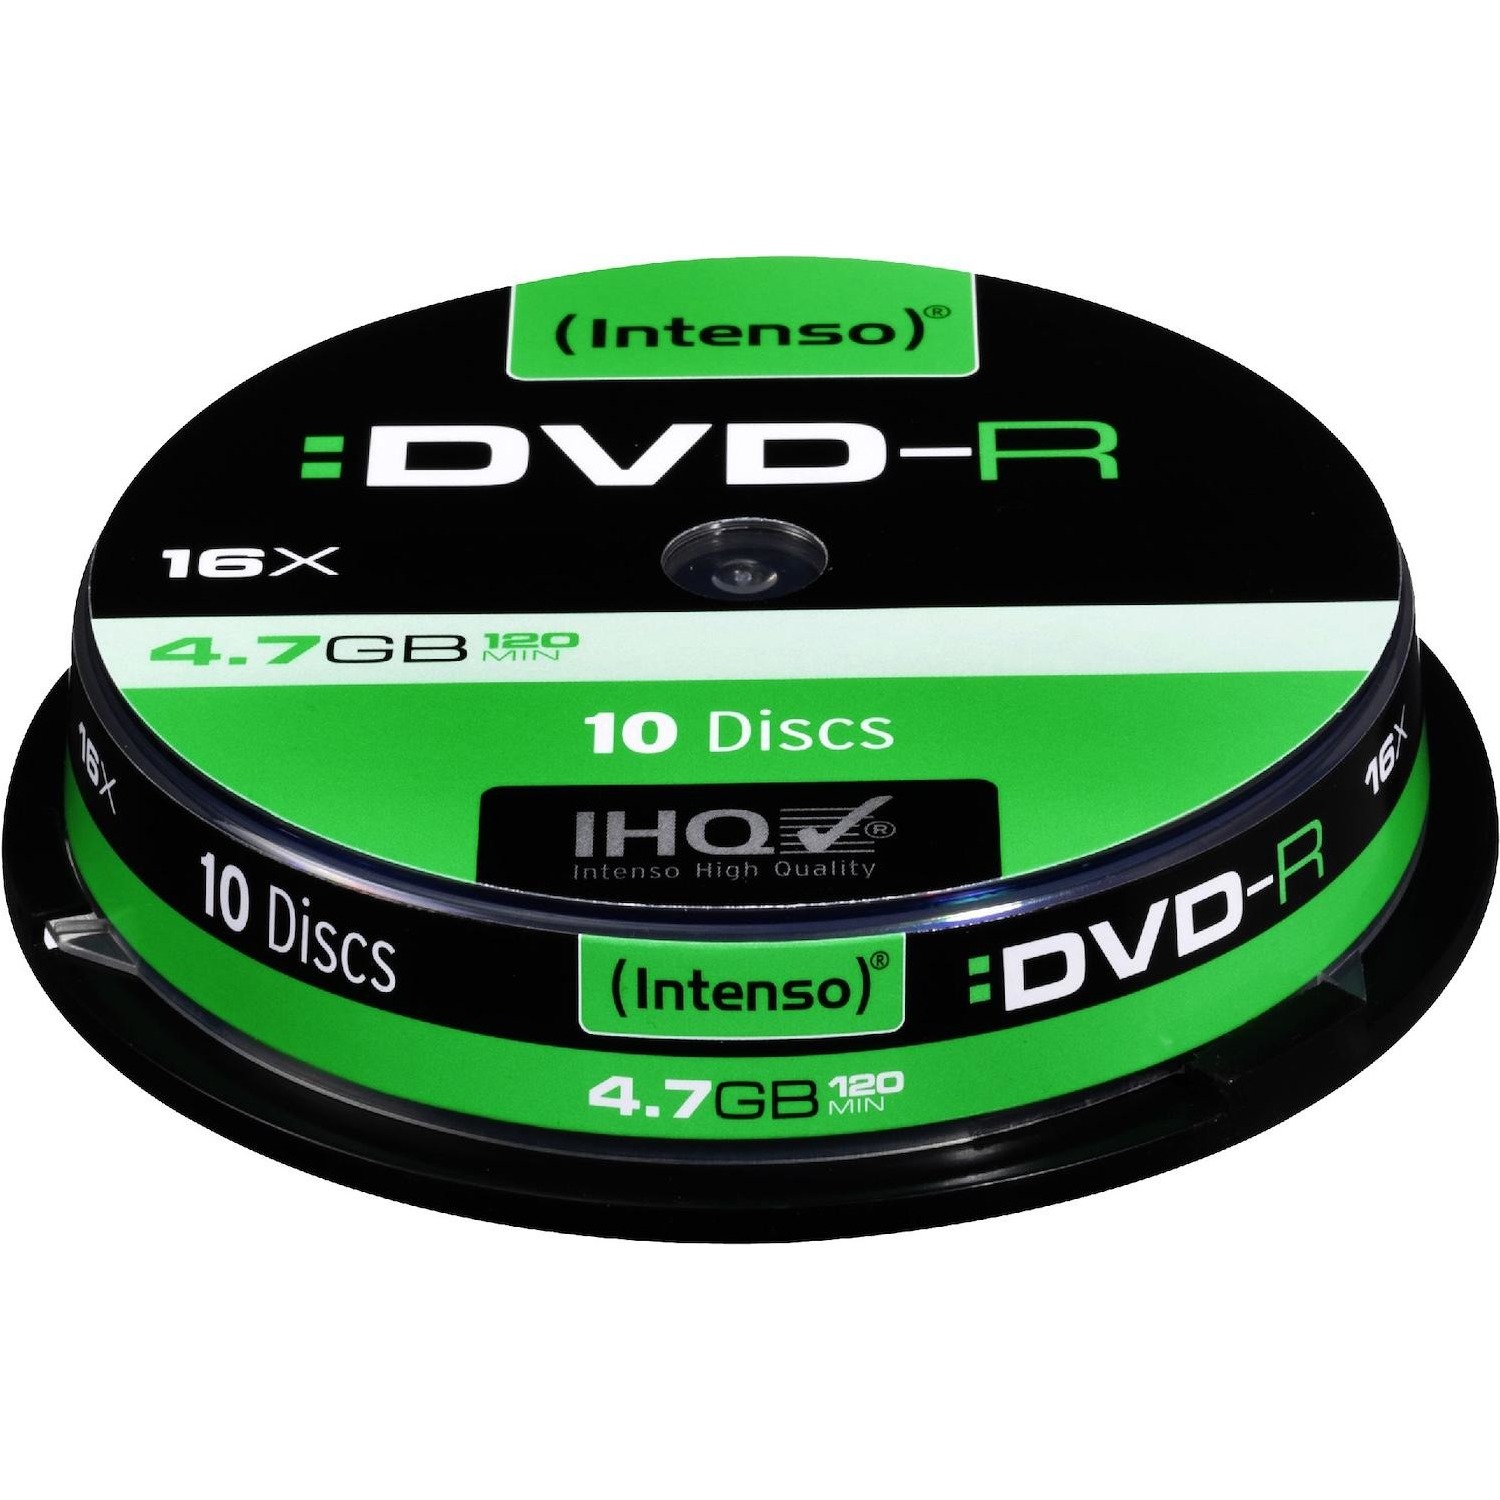 Immagine per DVD +R 4,70GB 10 pezzi SLIM da DIMOStore